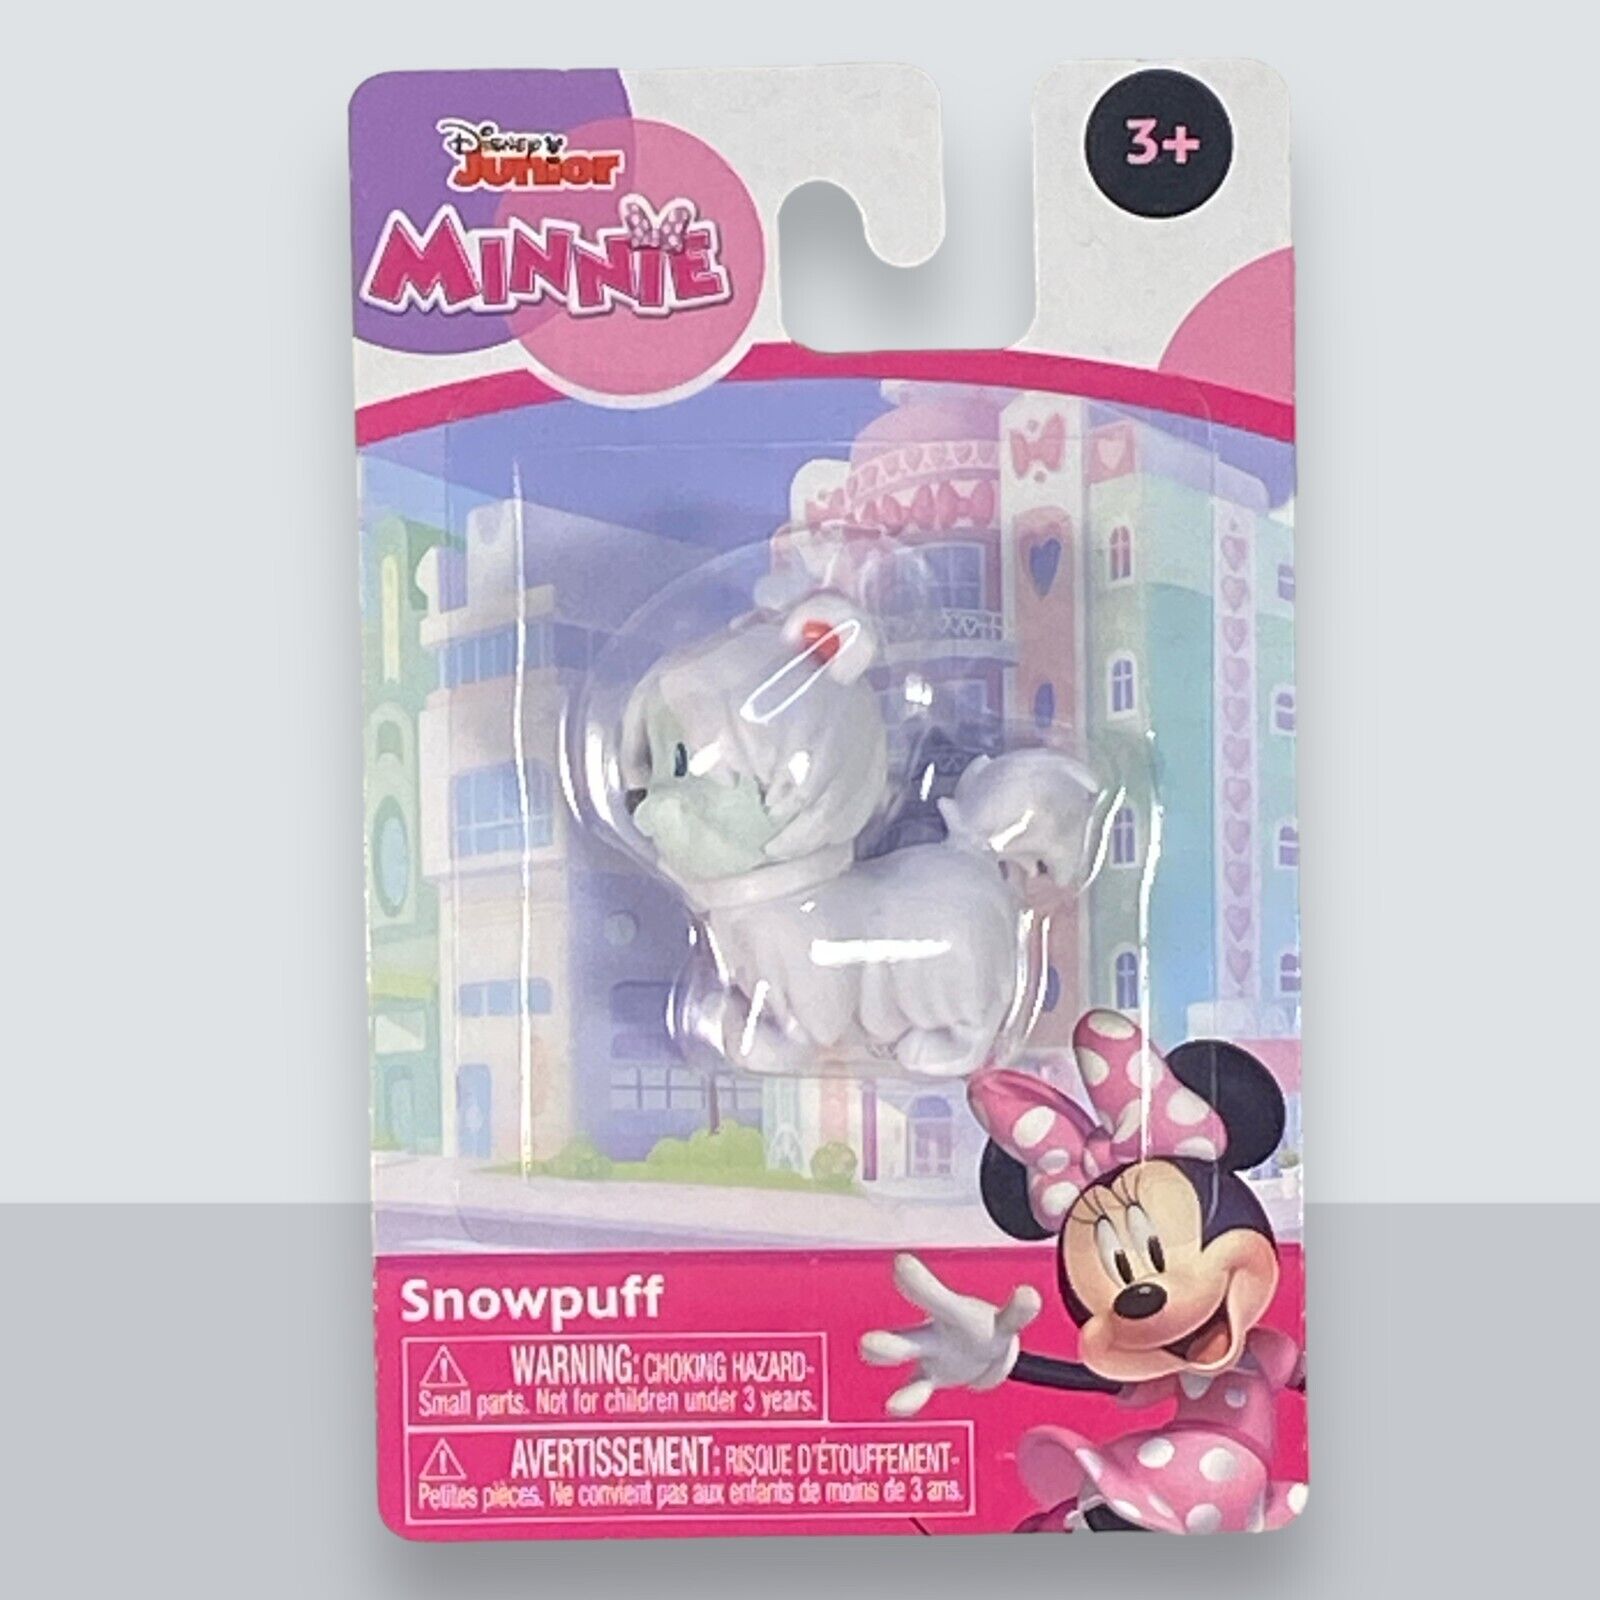 Disney Junior Minnie Mouse Pet Snowpuff Collectible Mini Figure Toy Cake Topper